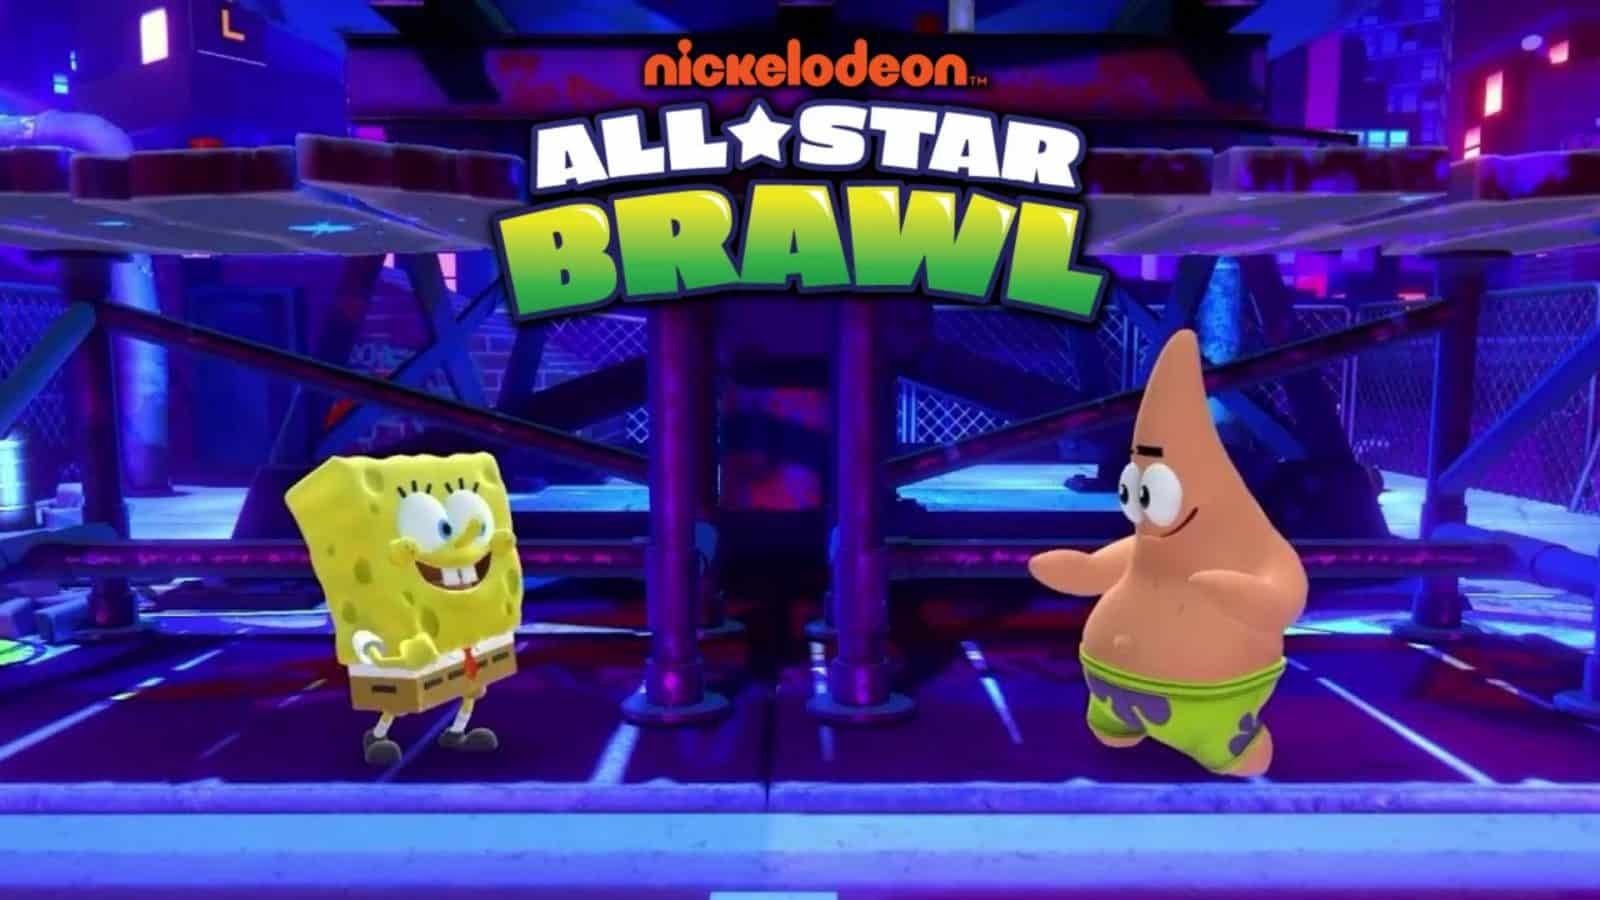 spongebob and patrick in nickelodeon all star brawl